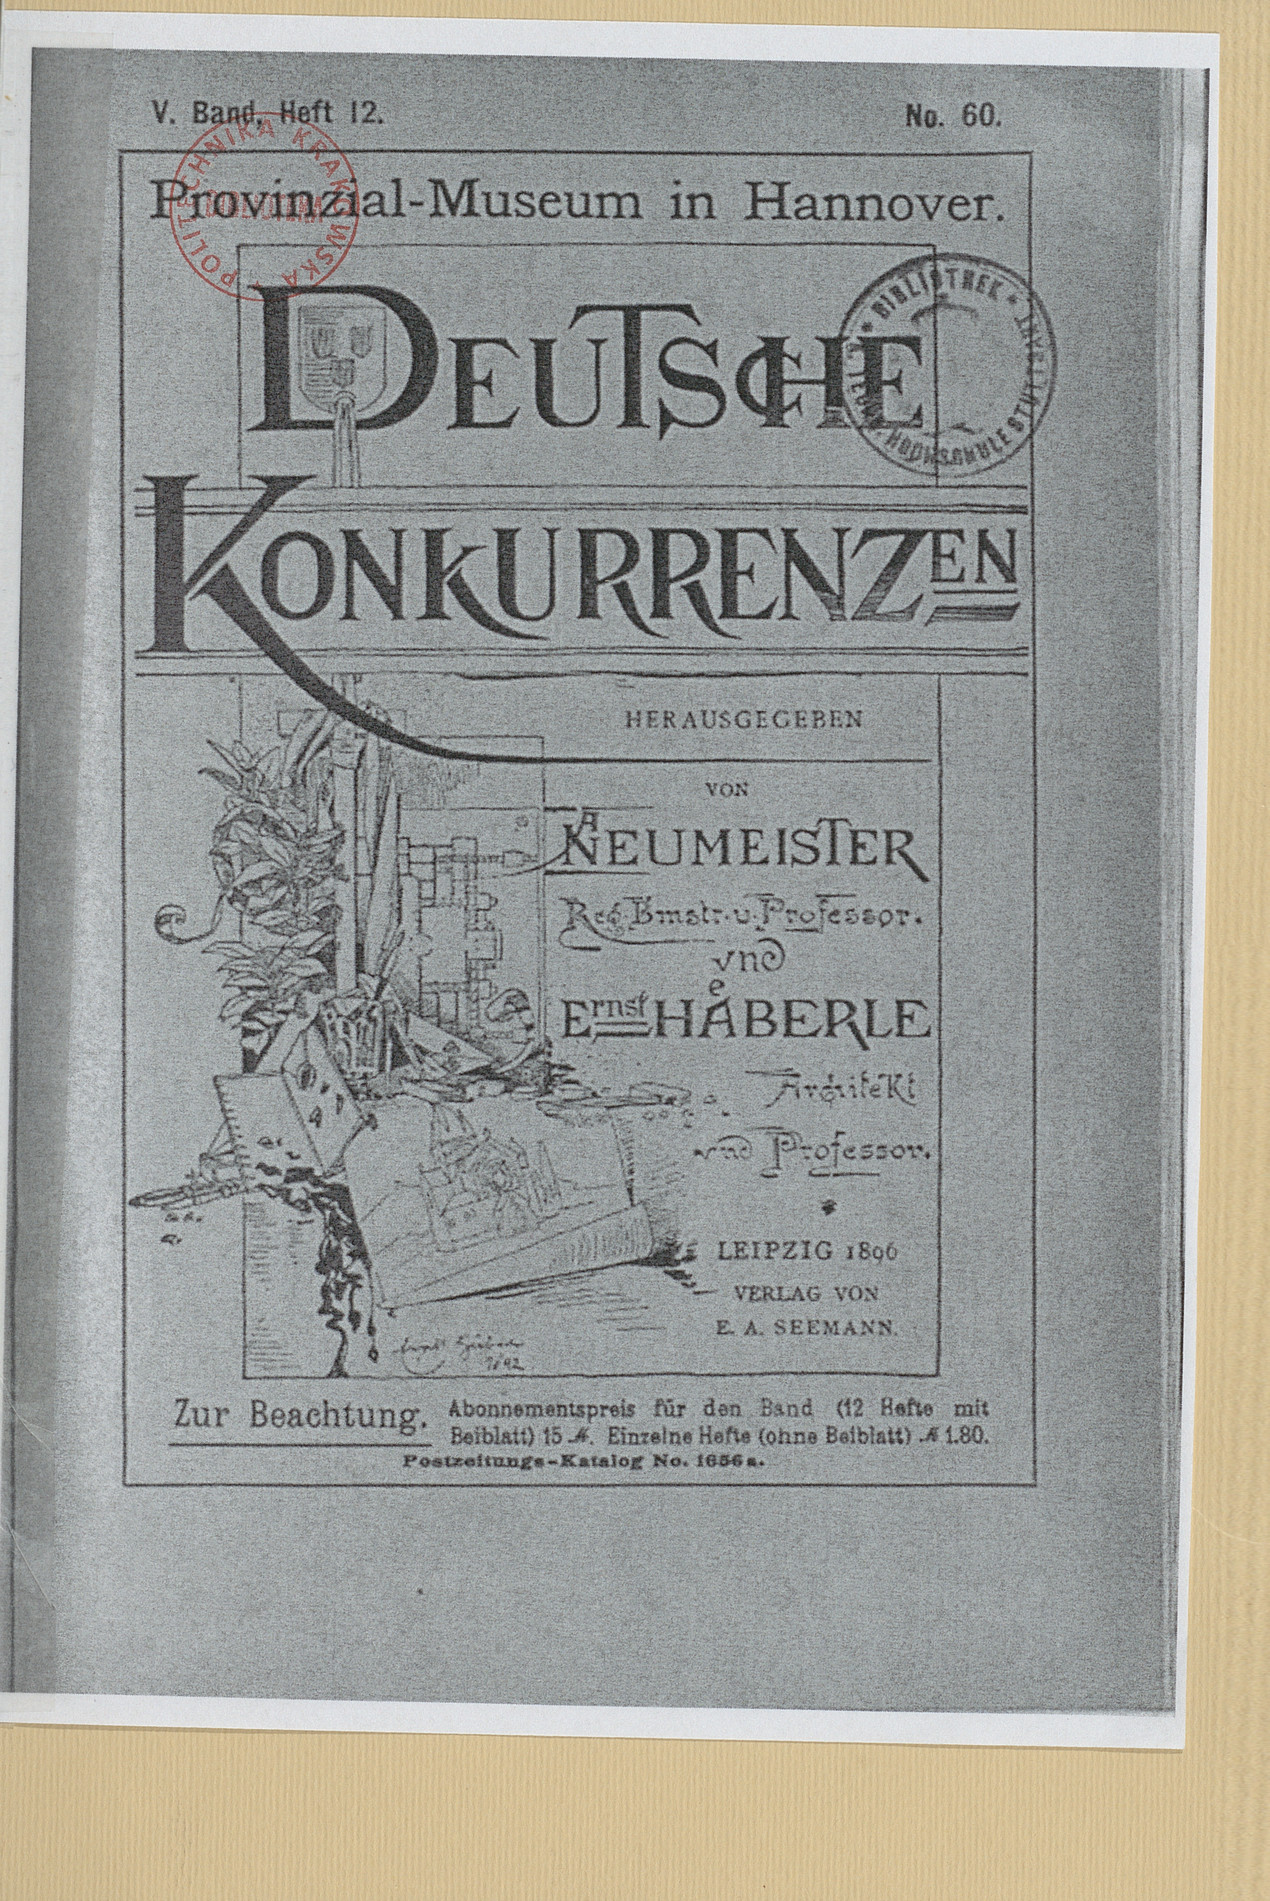 Deutsche Konkurrenzen, V. Band, Heft 12, No. 60